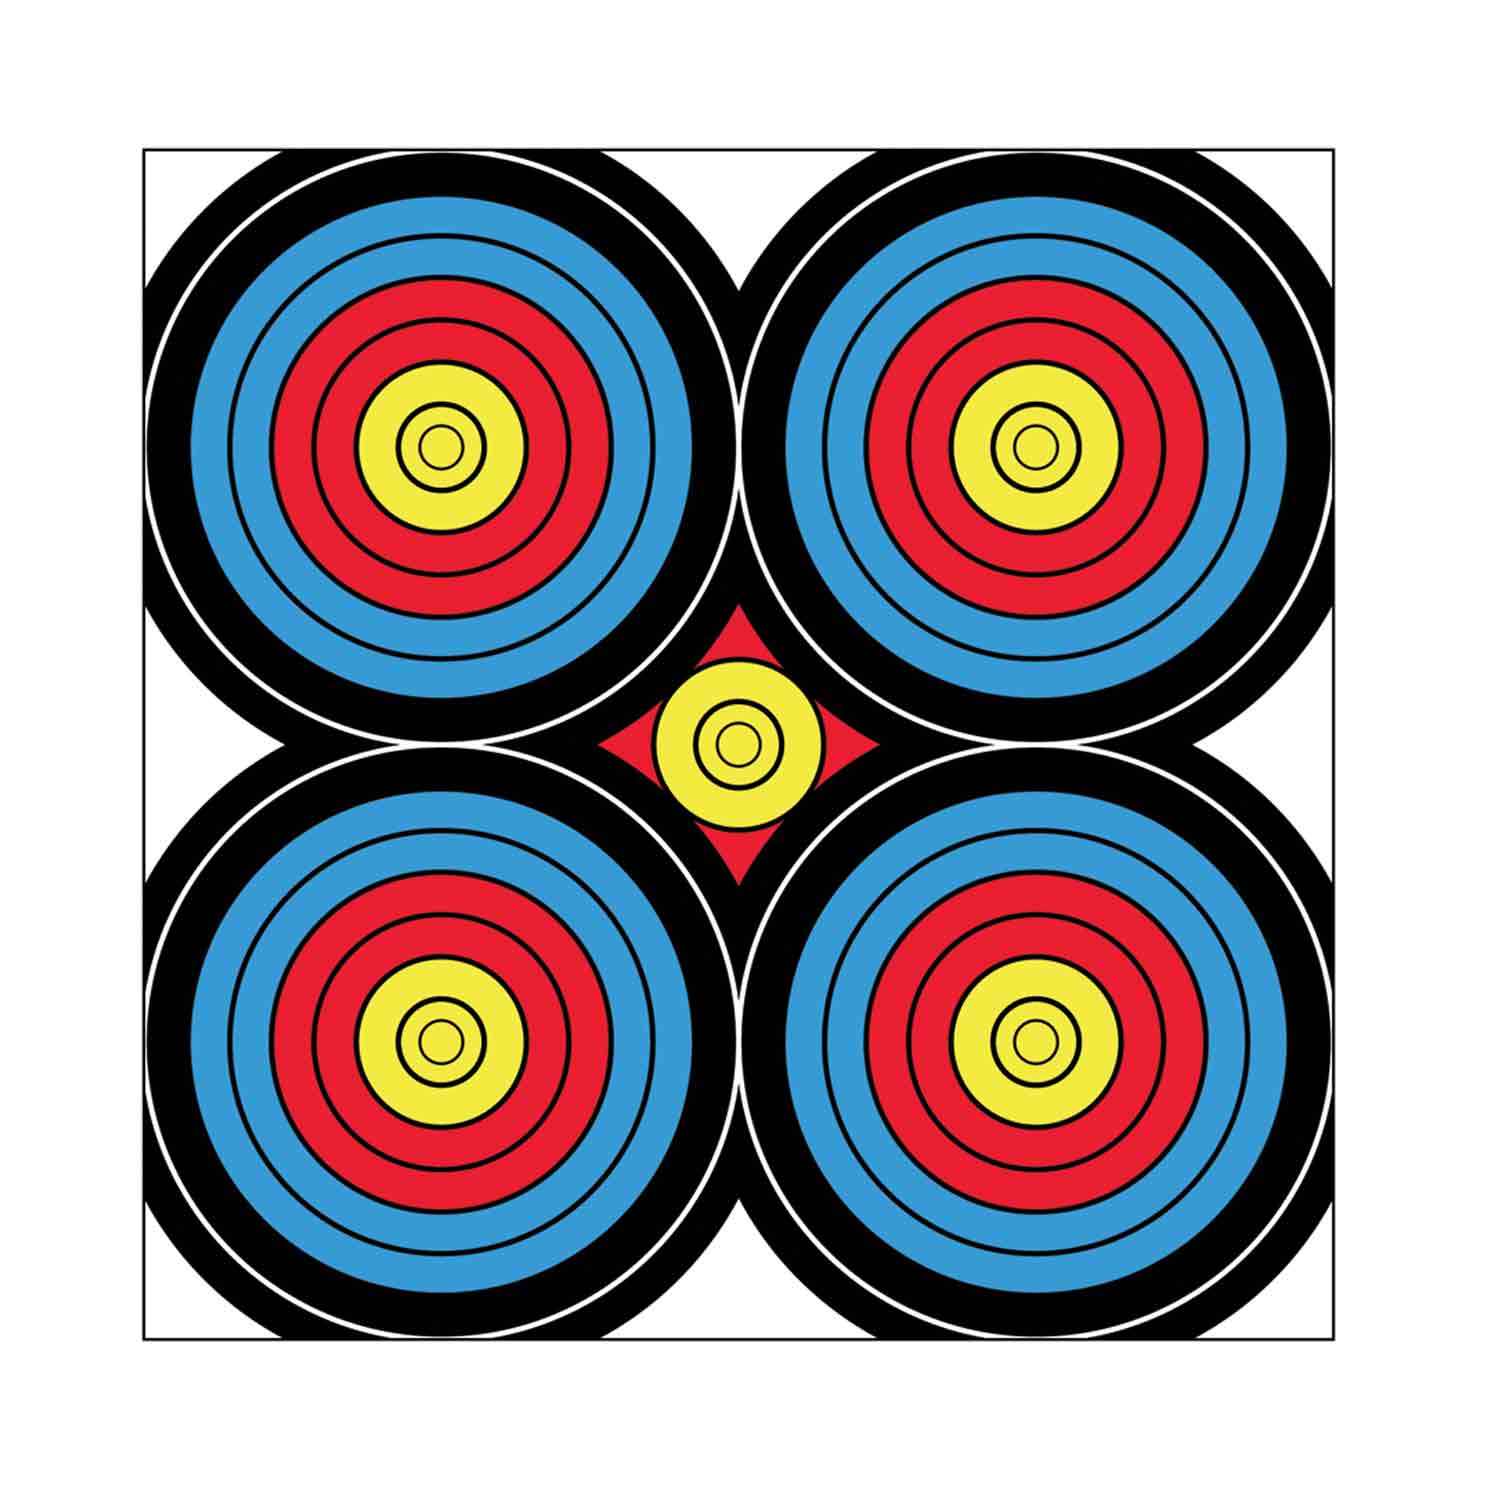 DuraMesh Archery Targets